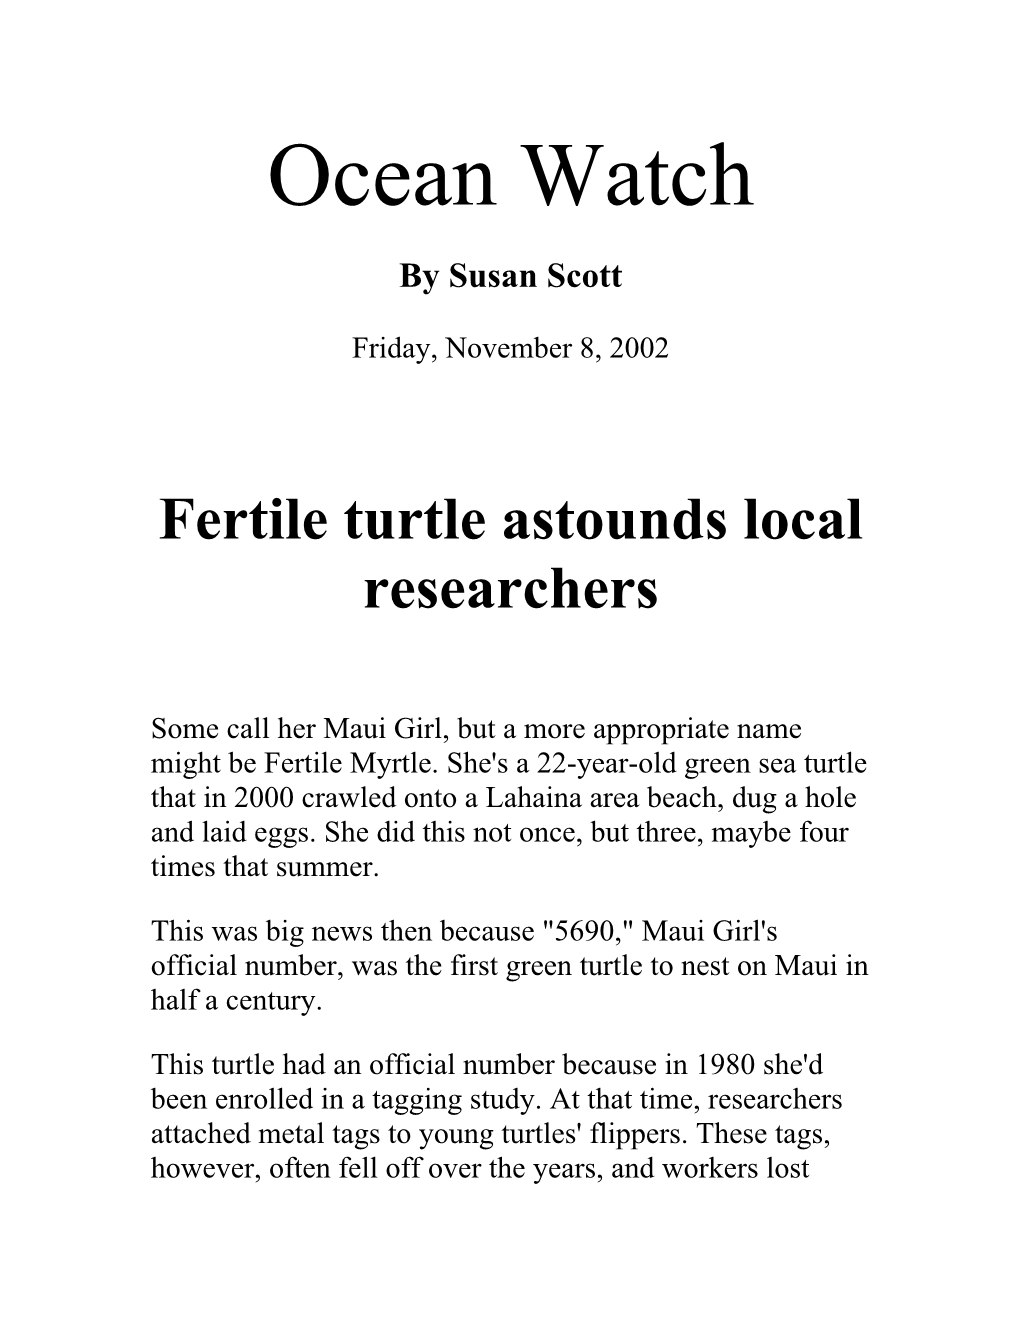 Fertile Turtle Astounds Local Researchers